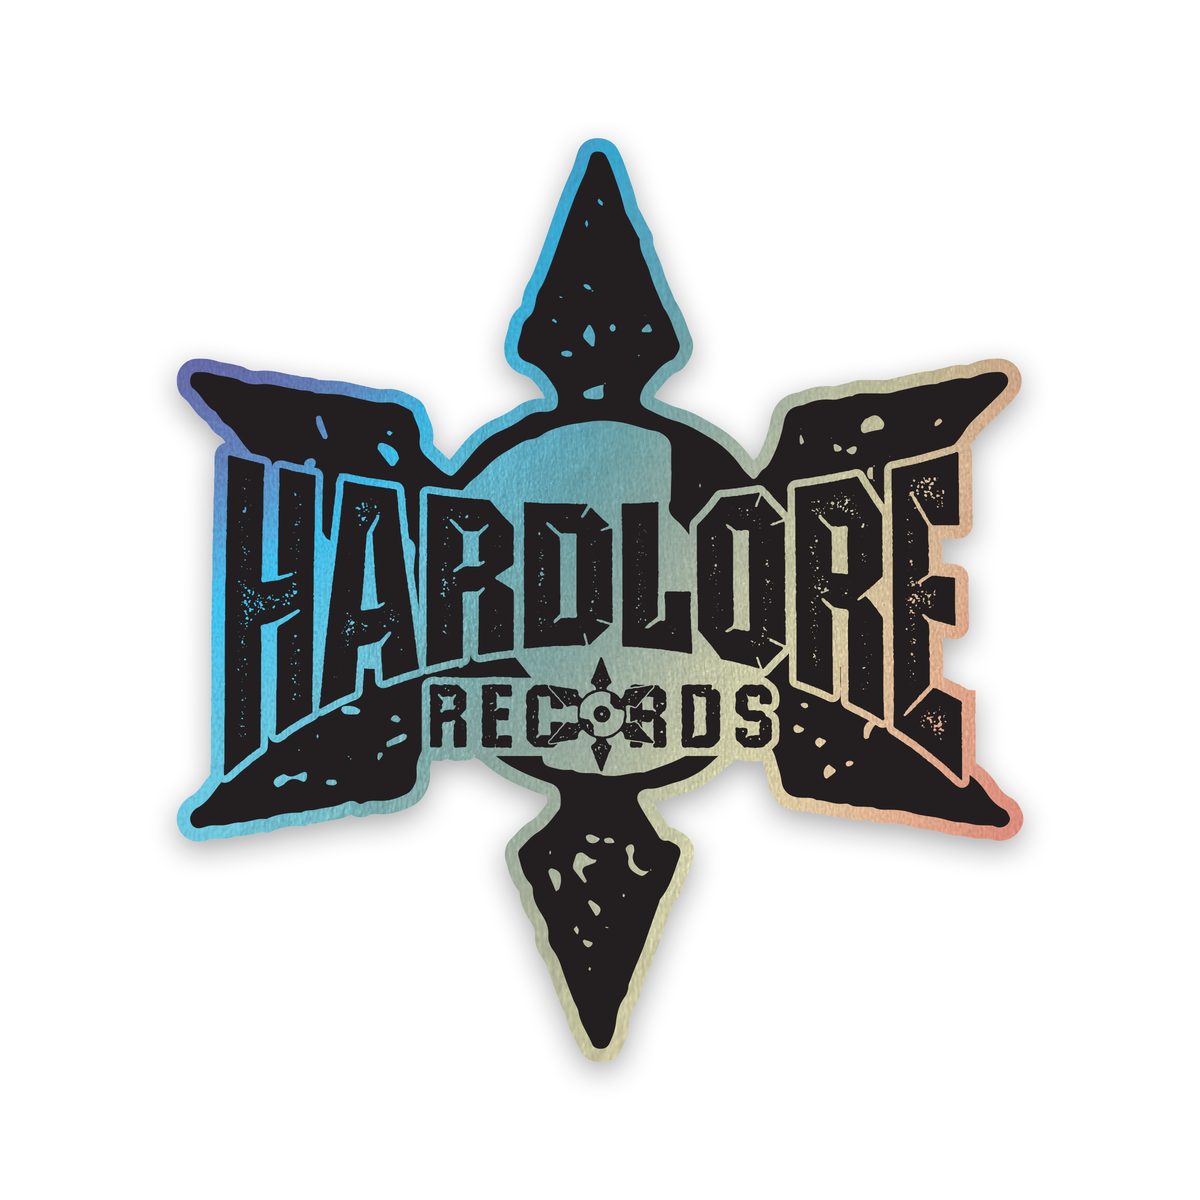 Hardlore Records Hologram Sticker